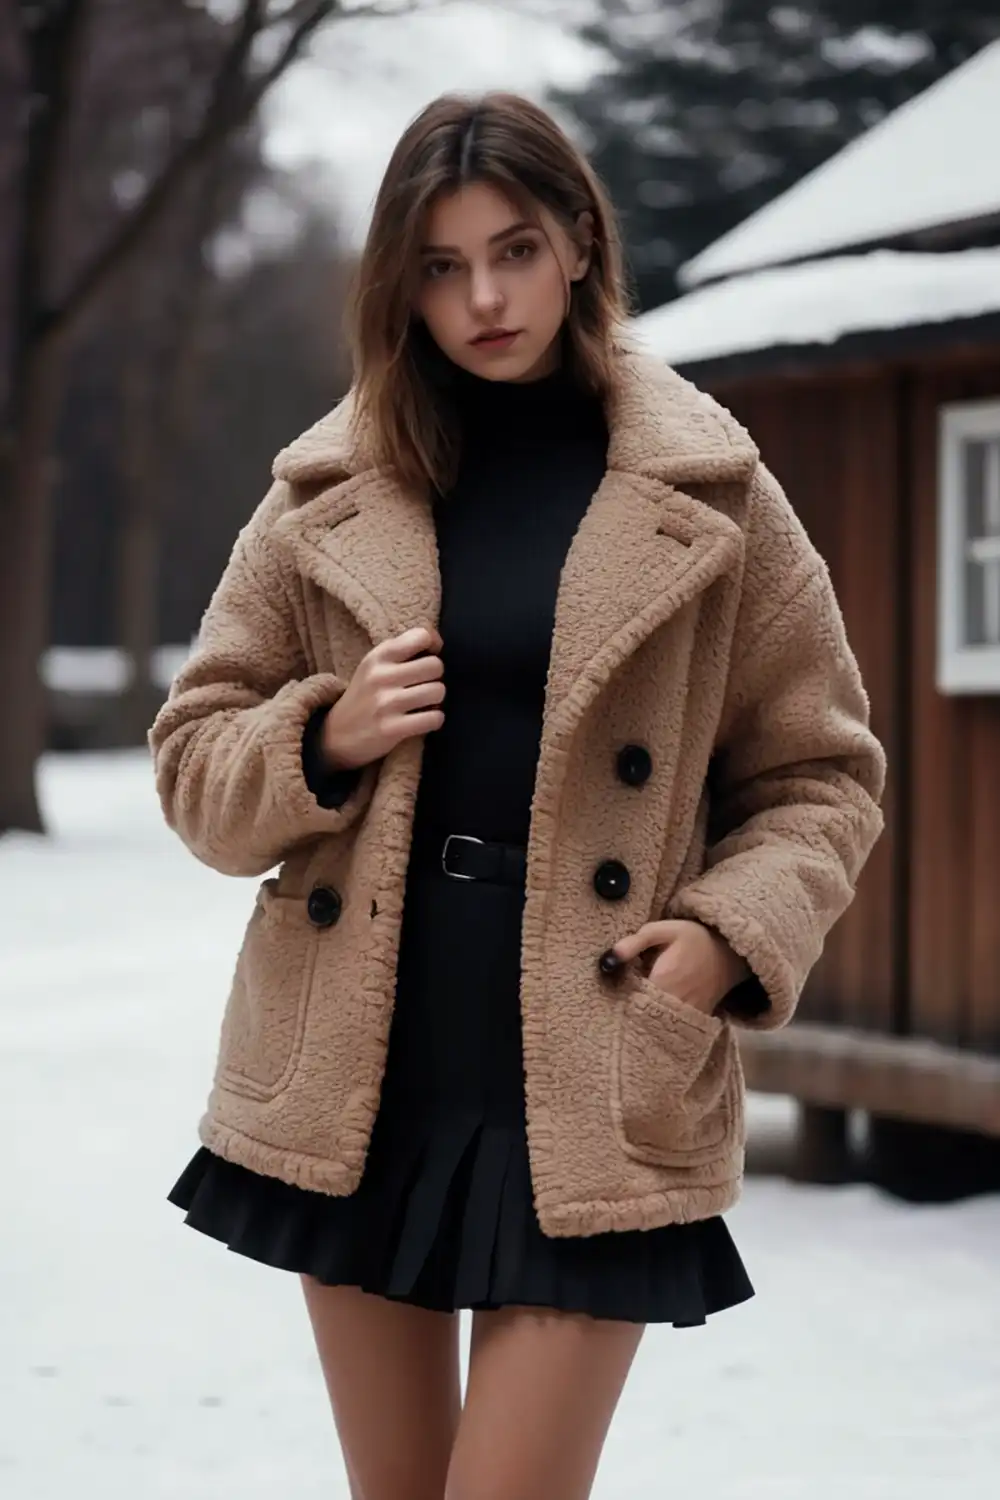 Girl wearing teddy coat with black short skirt in winter